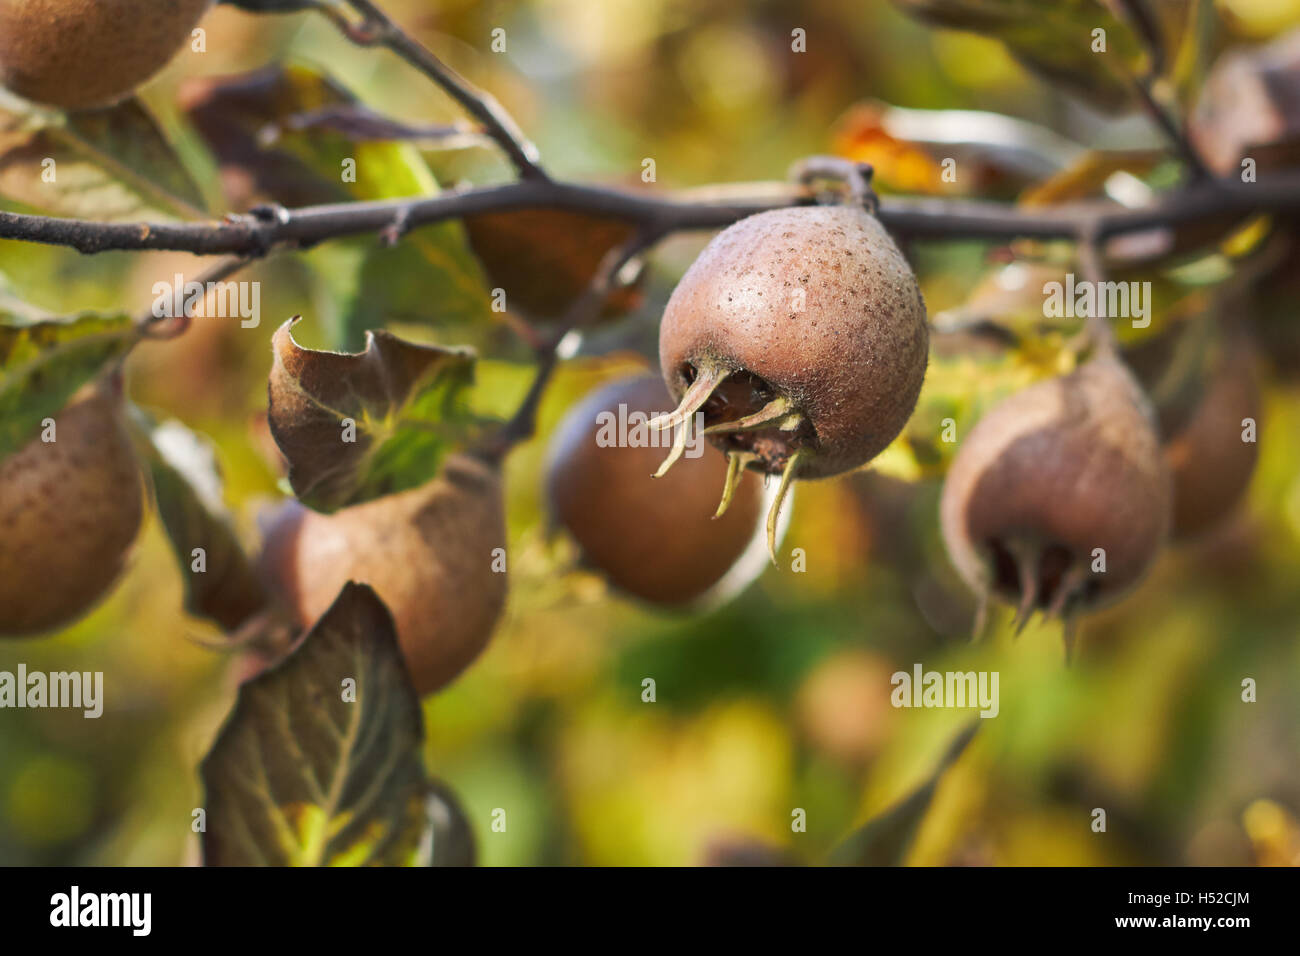 Closeup of common medlar fruit growing on tree Stock Photo